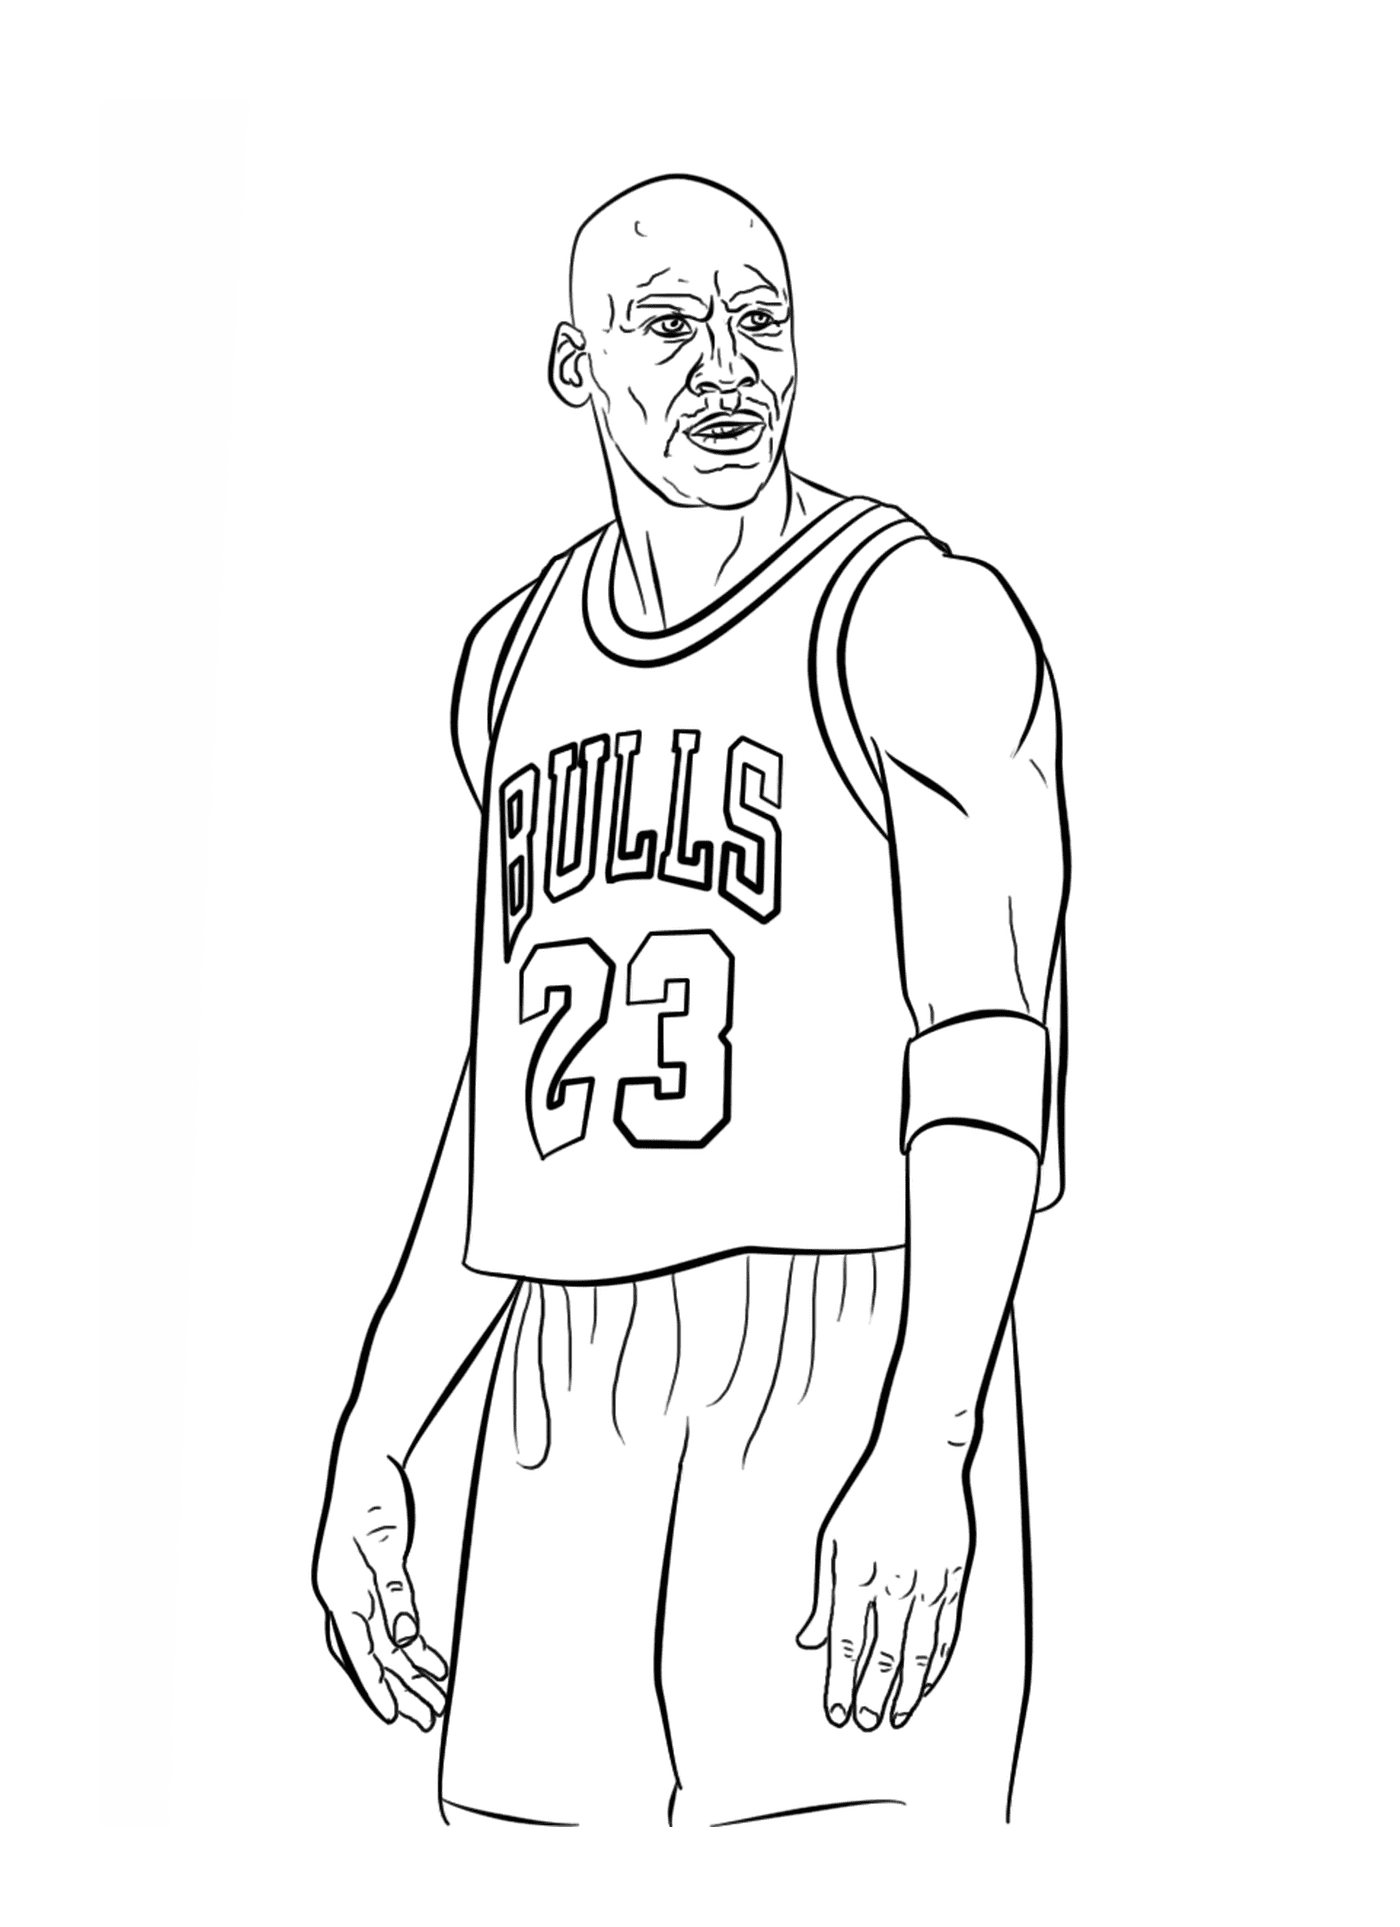  Michael Jordan, NBA basketball player 